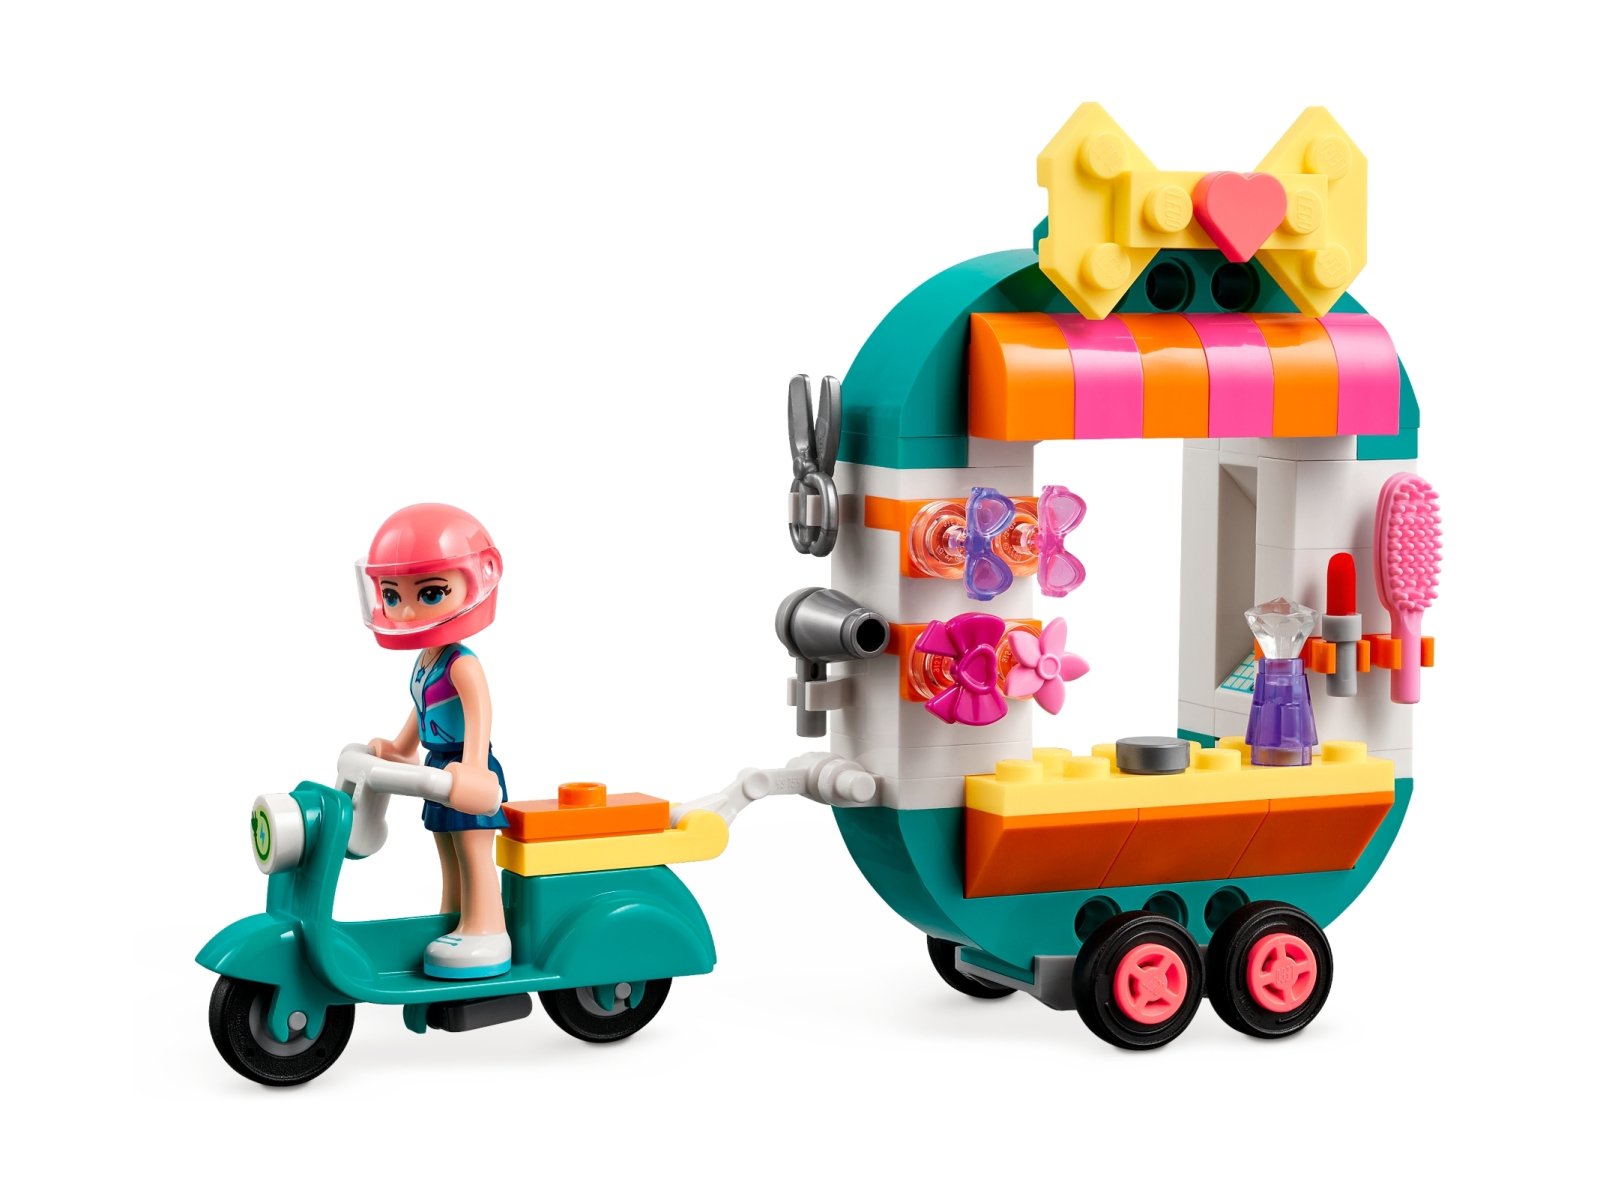 LEGO 41719 Friends Mobilny butik